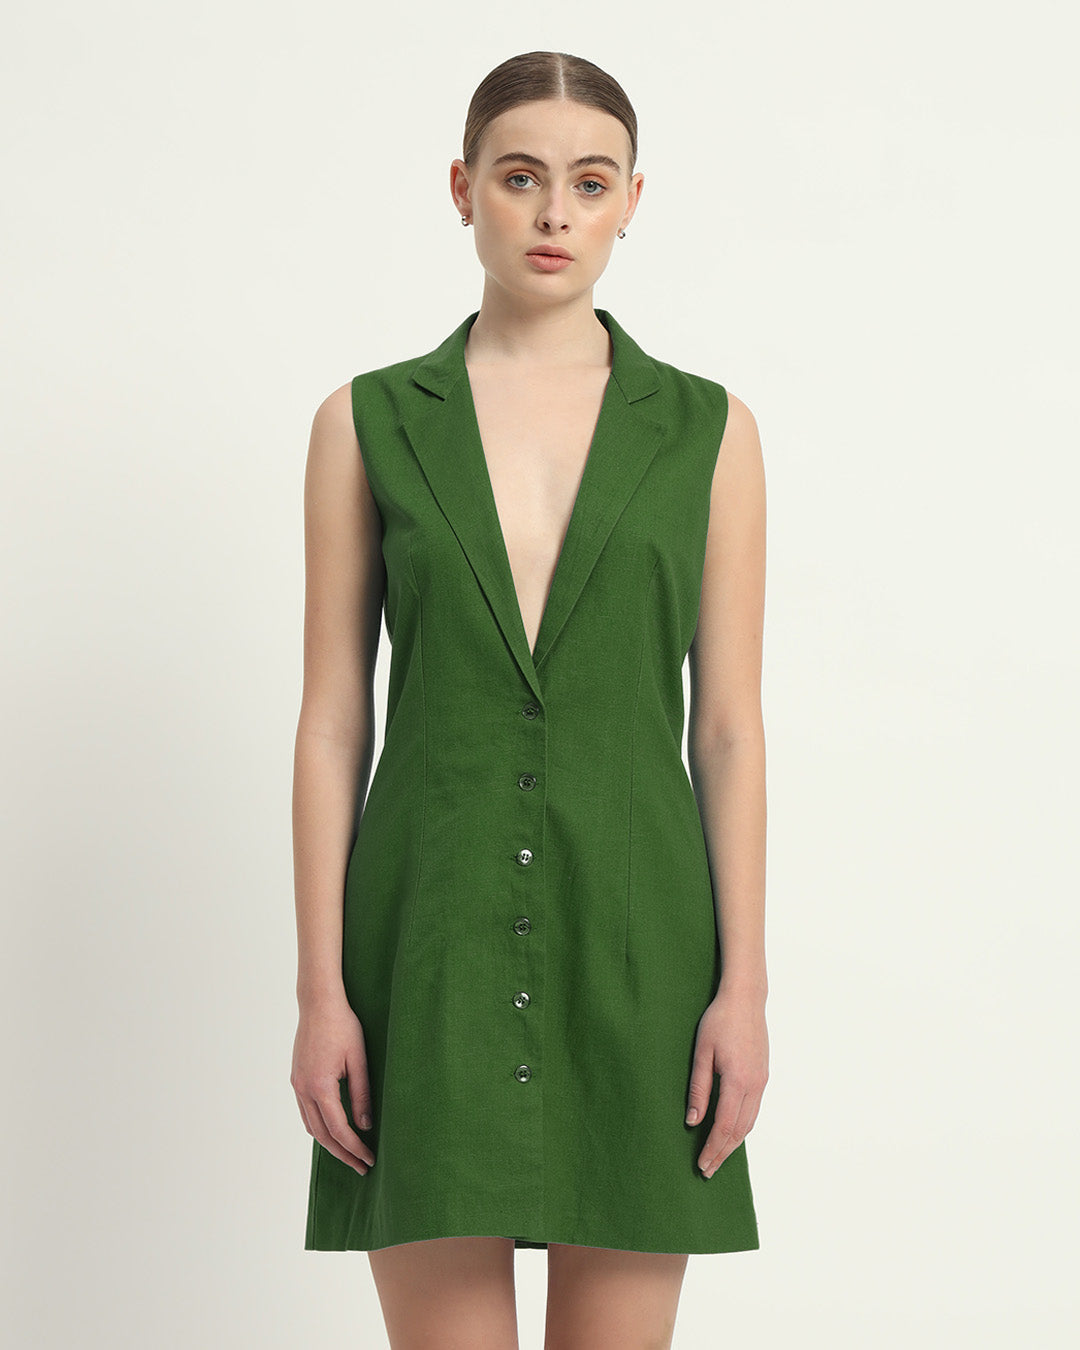 The Emerald Vernon Cotton Dress